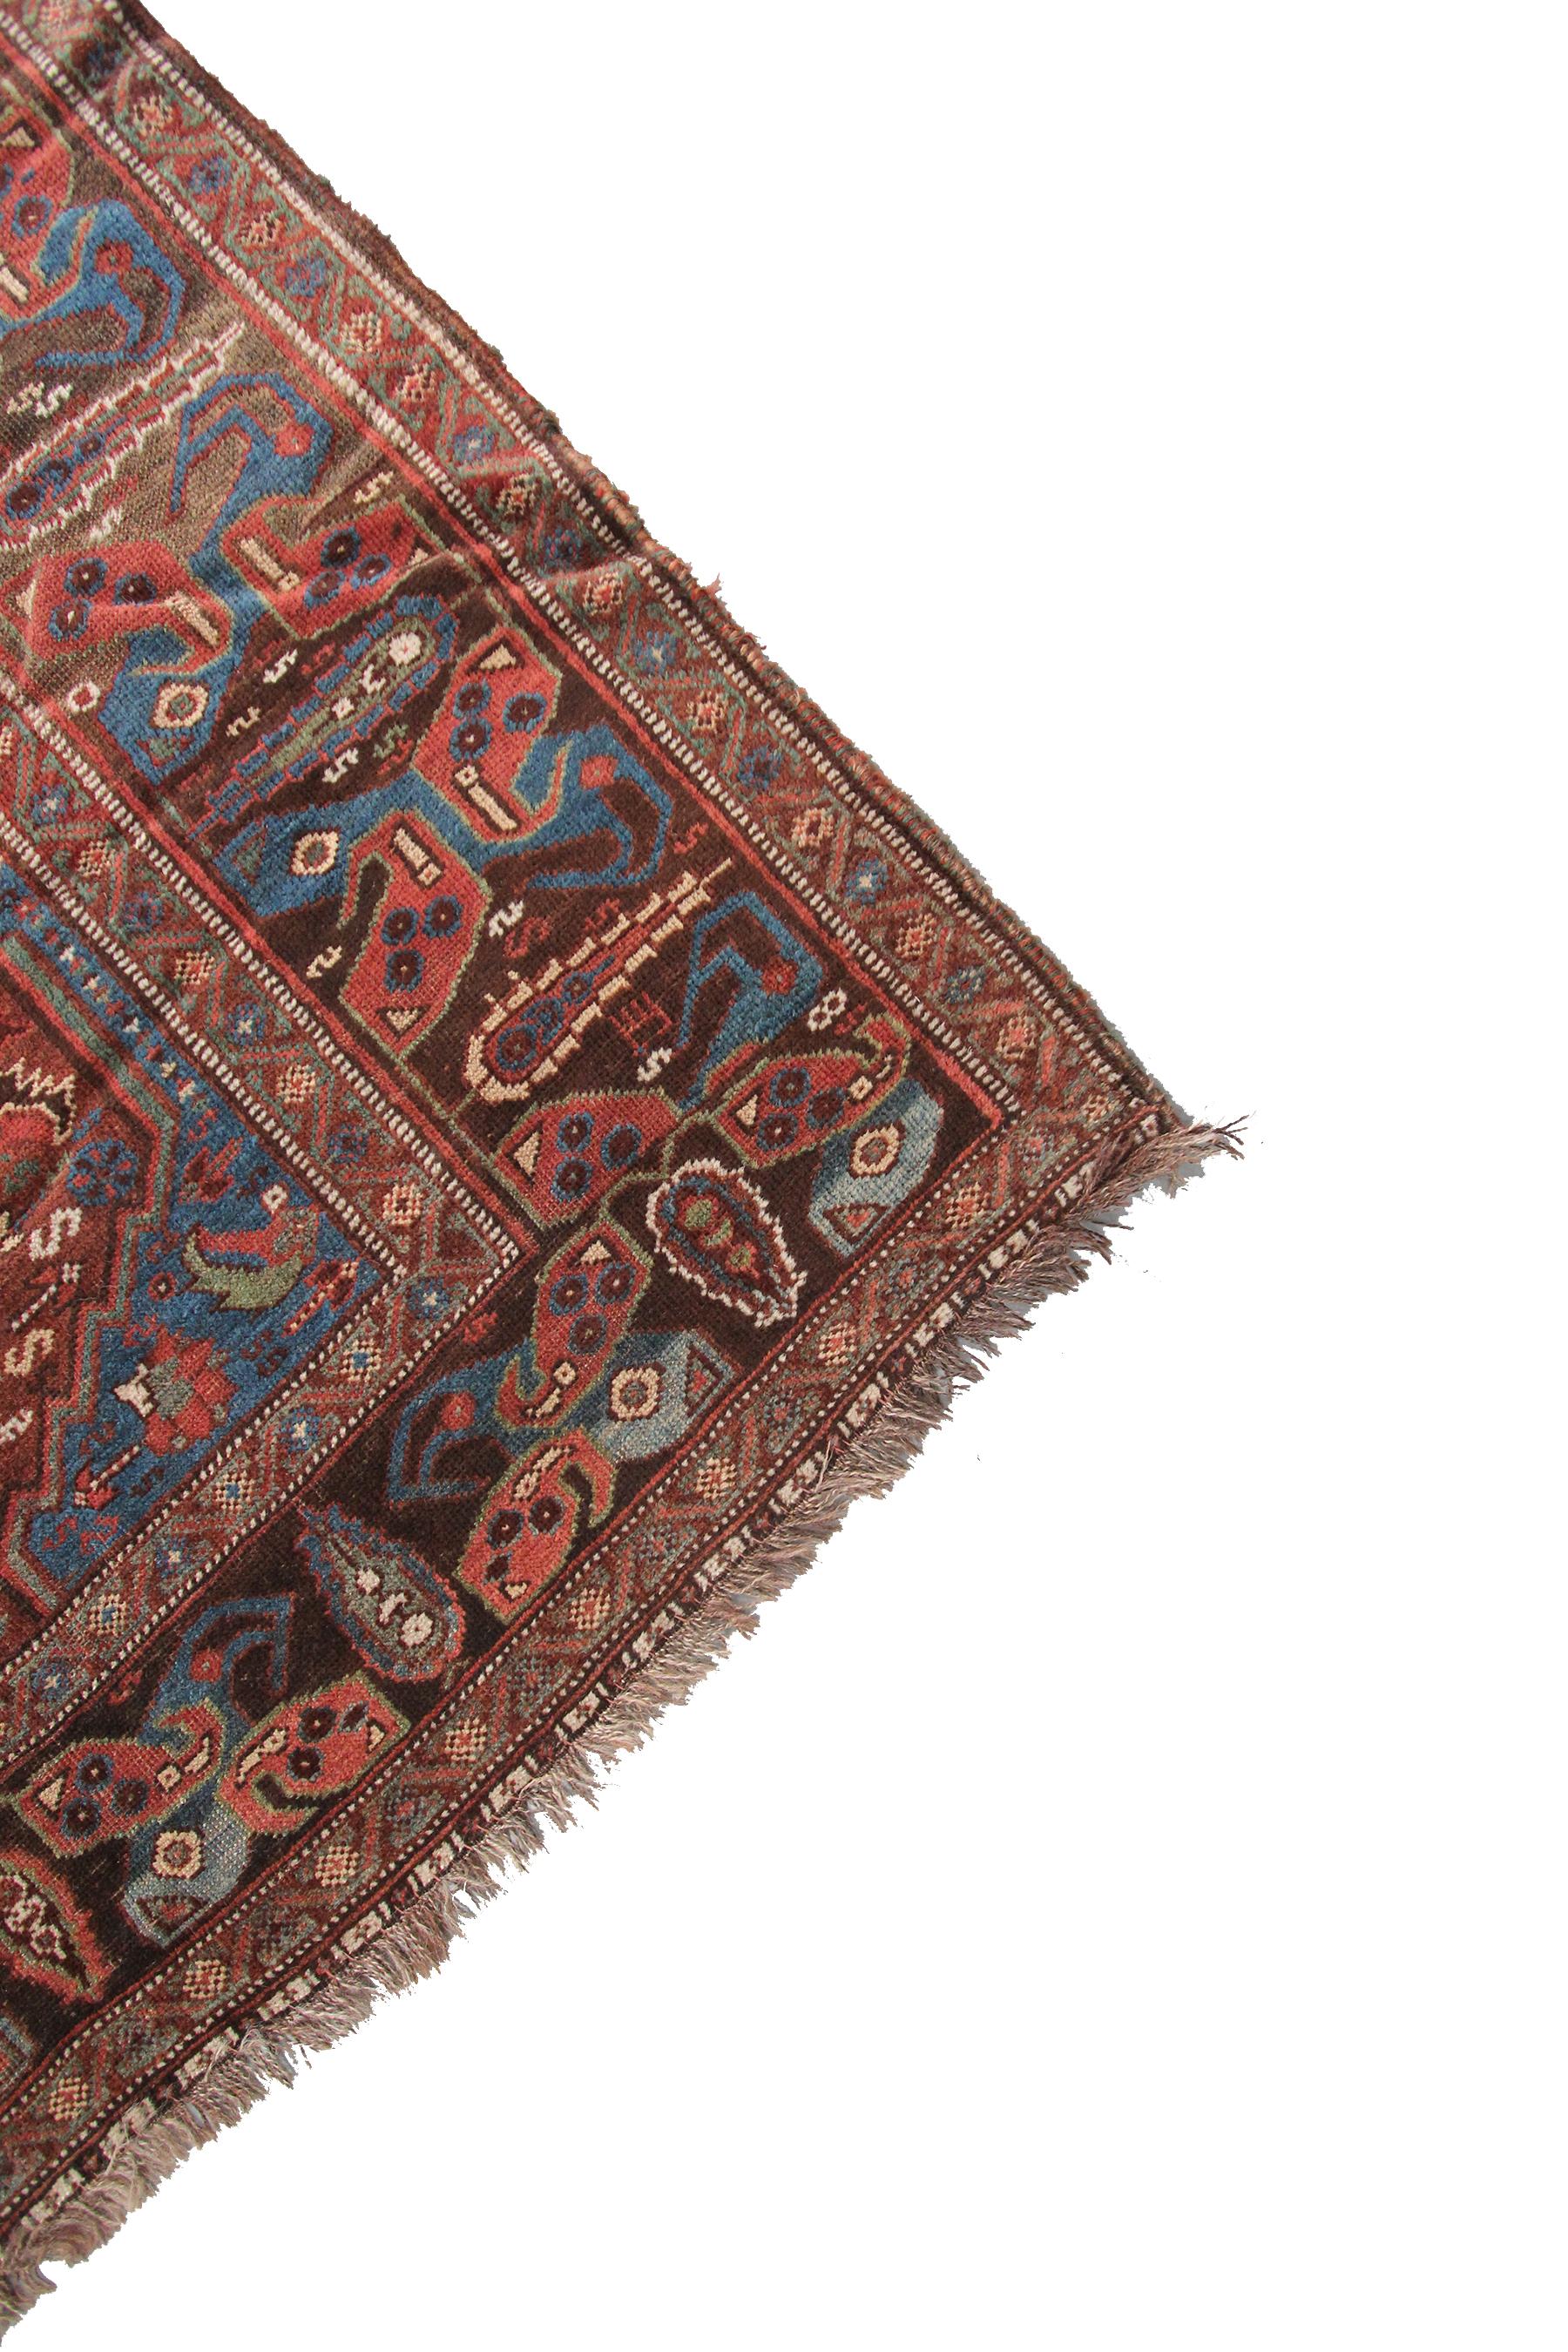 Antique Persian Rug Kurdish Tribal Khamseh Rug Runner Geometric Tribal Rug For Sale 2